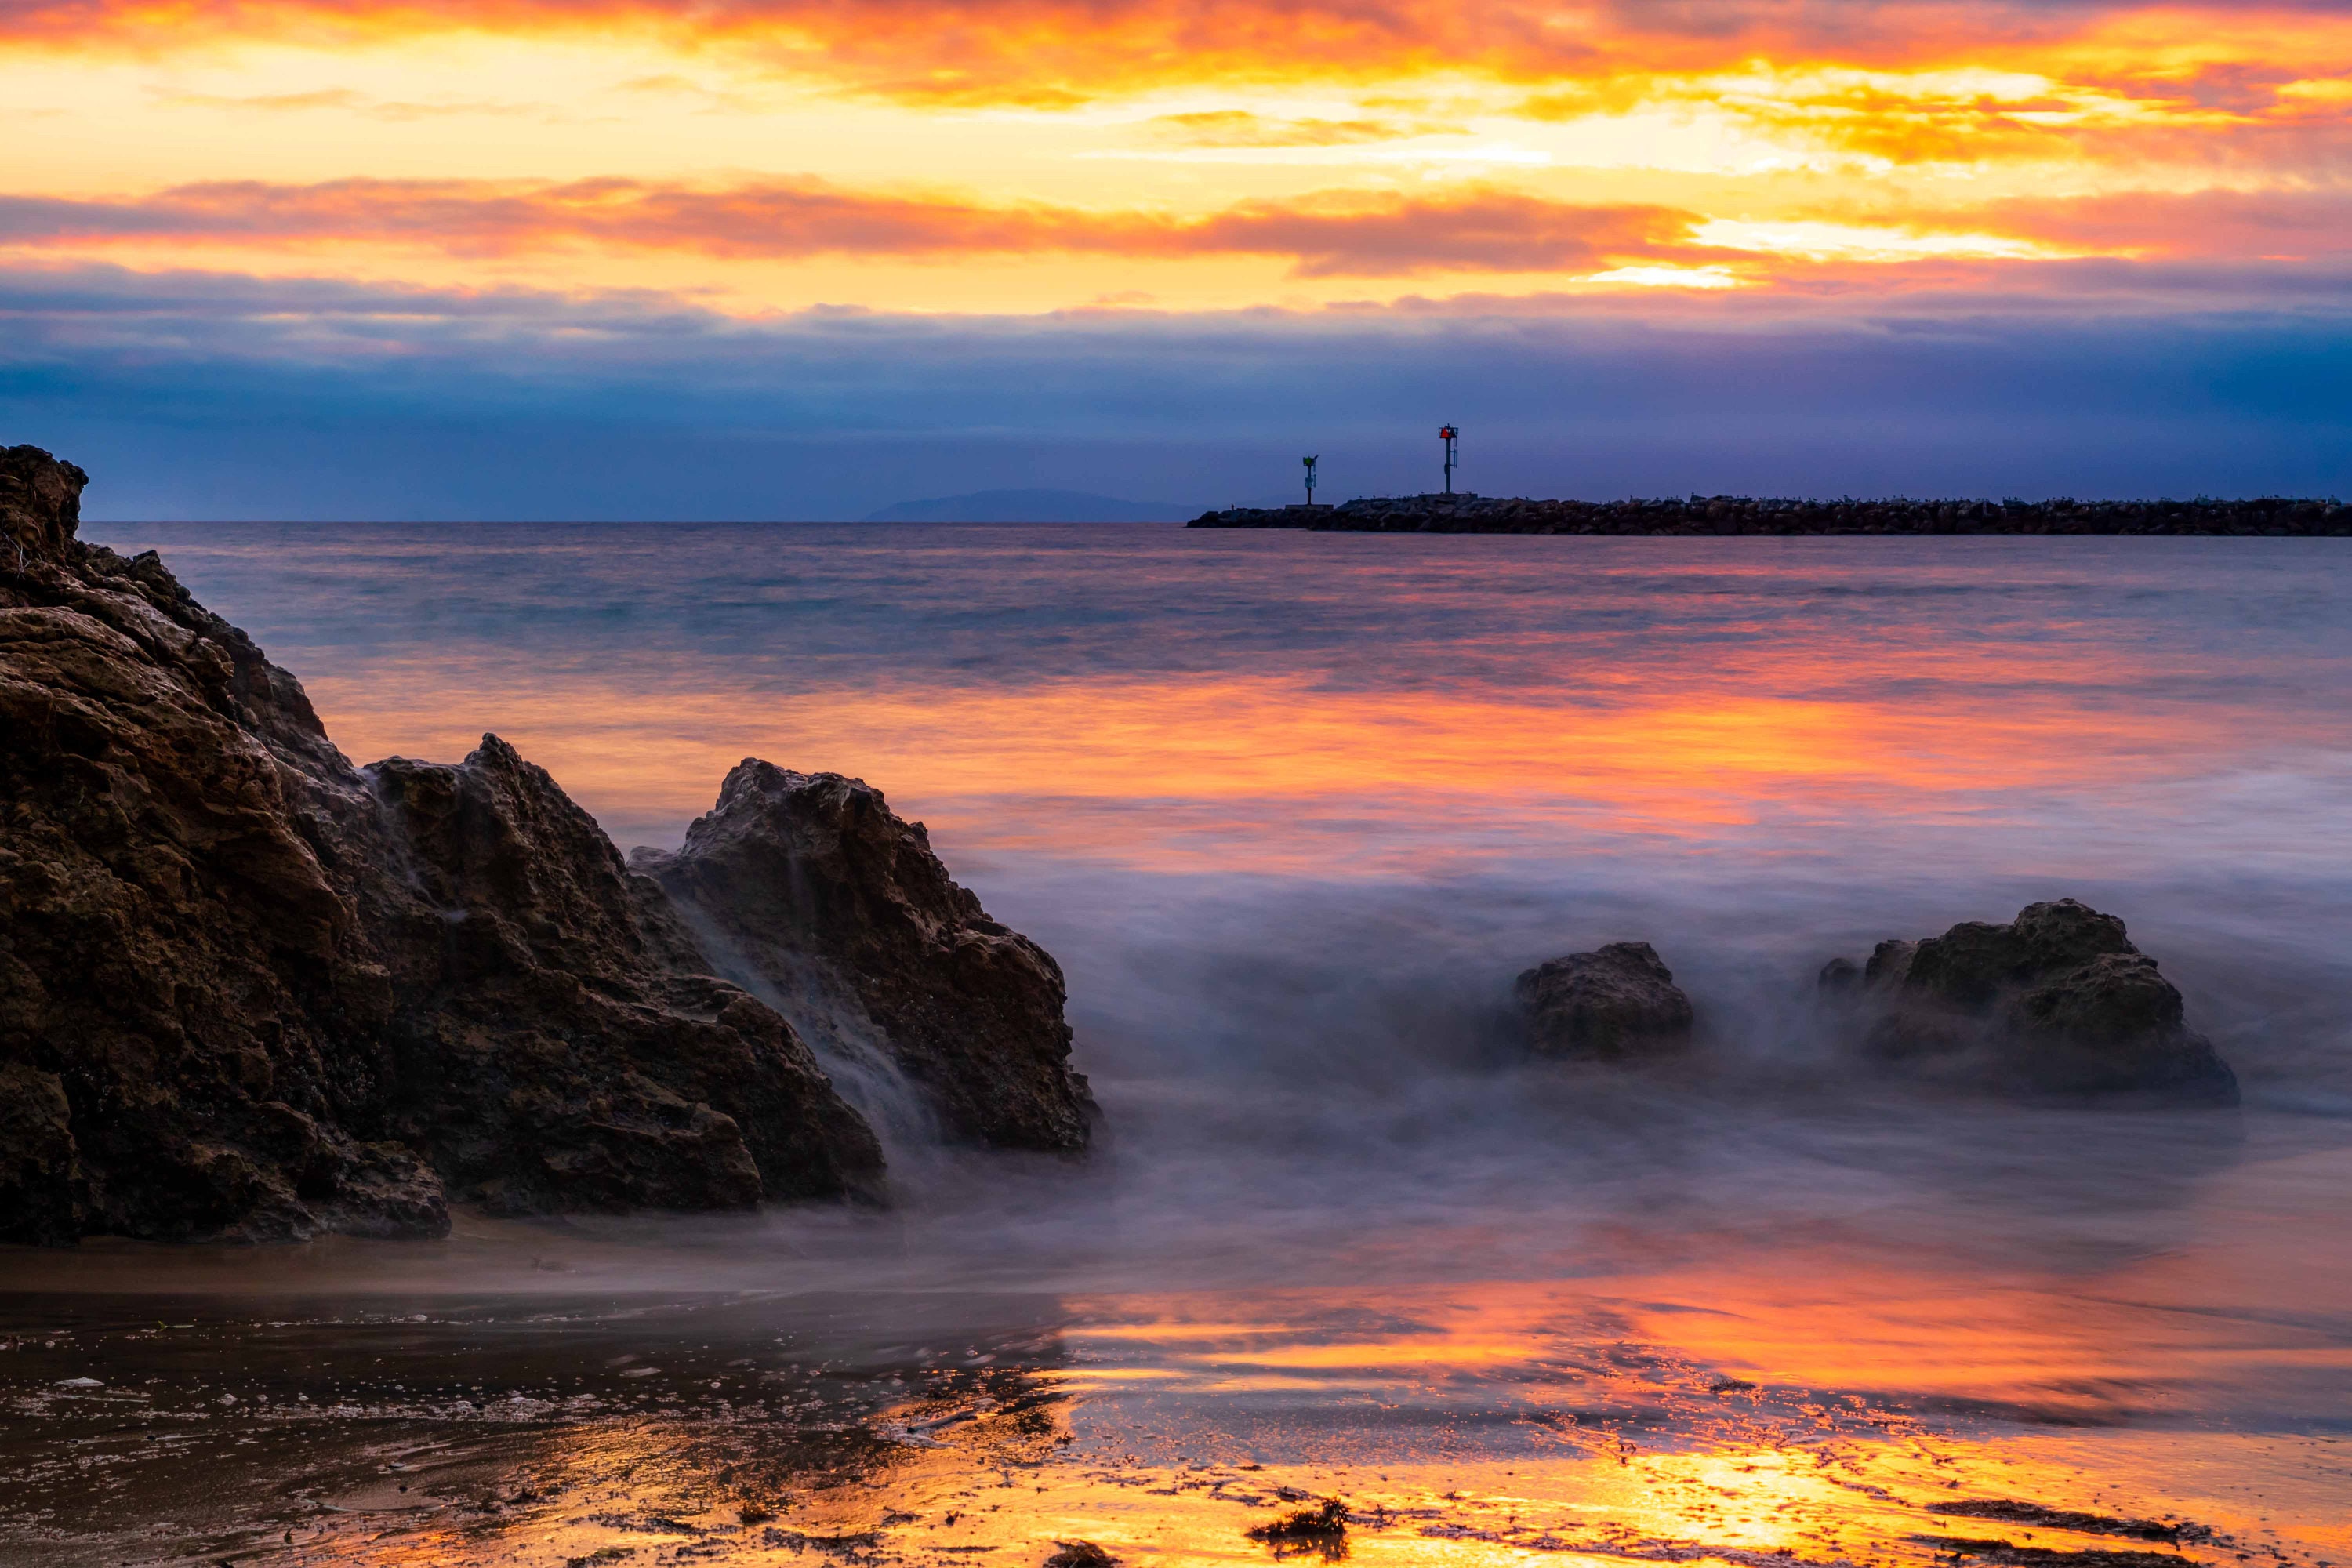 Corona Del Mar Beach Sunset Seascape Photography Print in